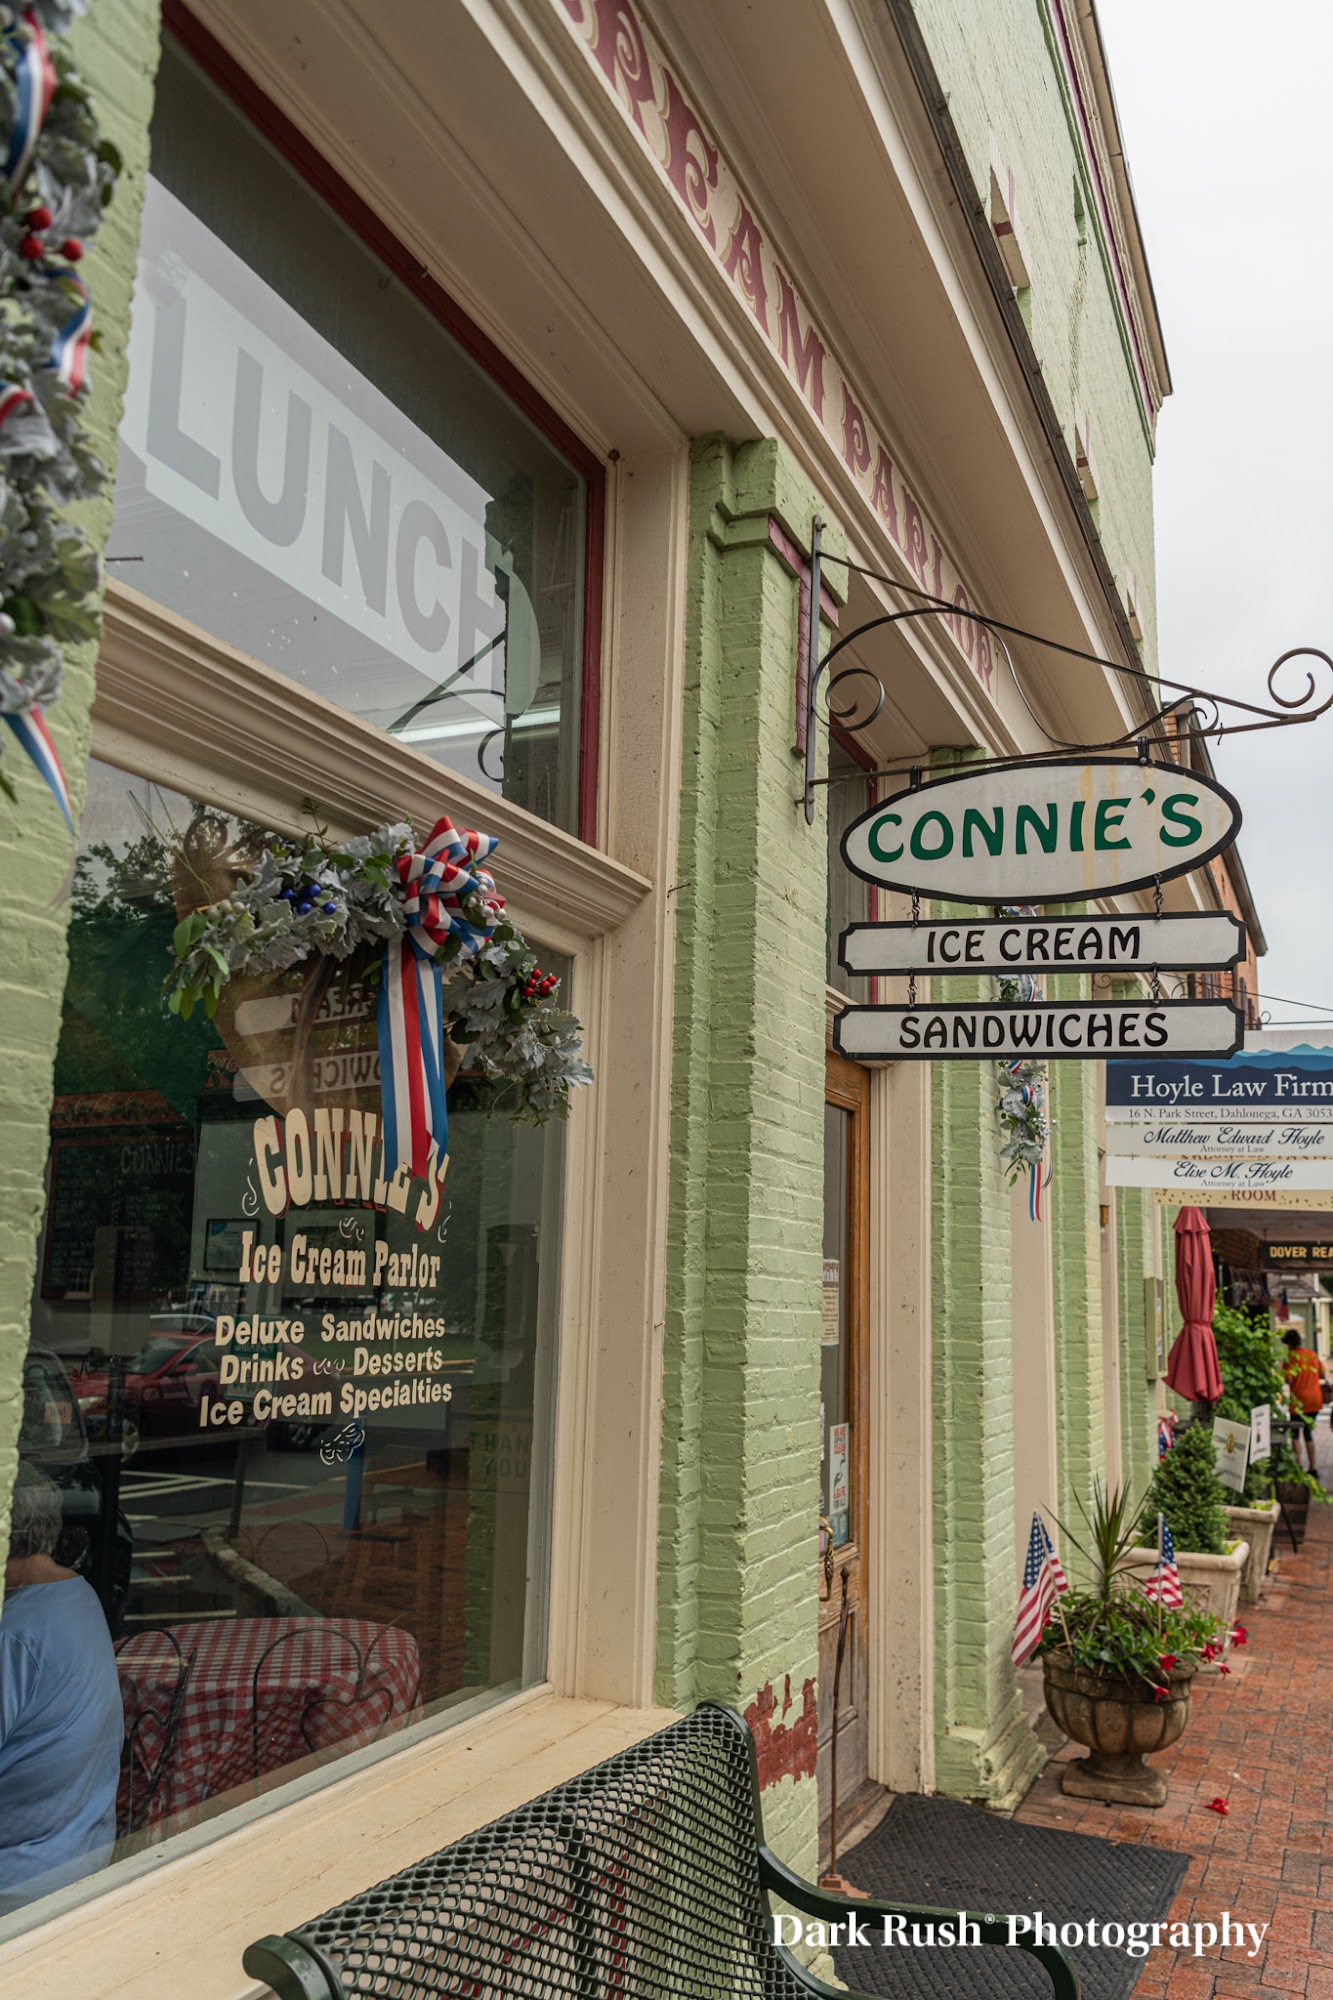 Connie's Ice Cream Parlor